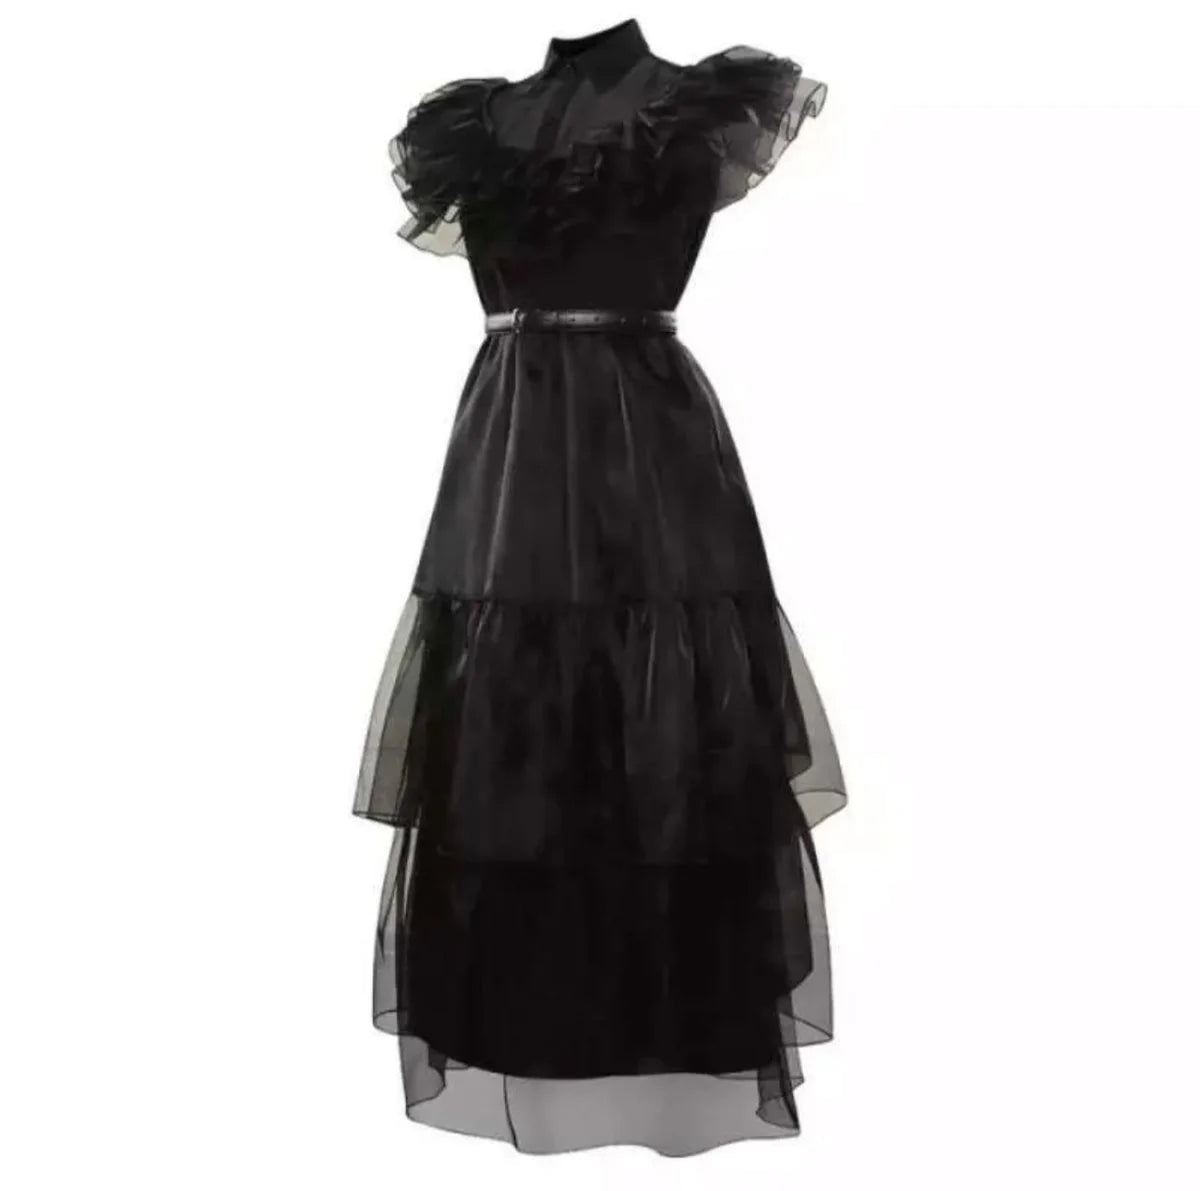 Wednesday Addams - Ball Dress (Adult Size)